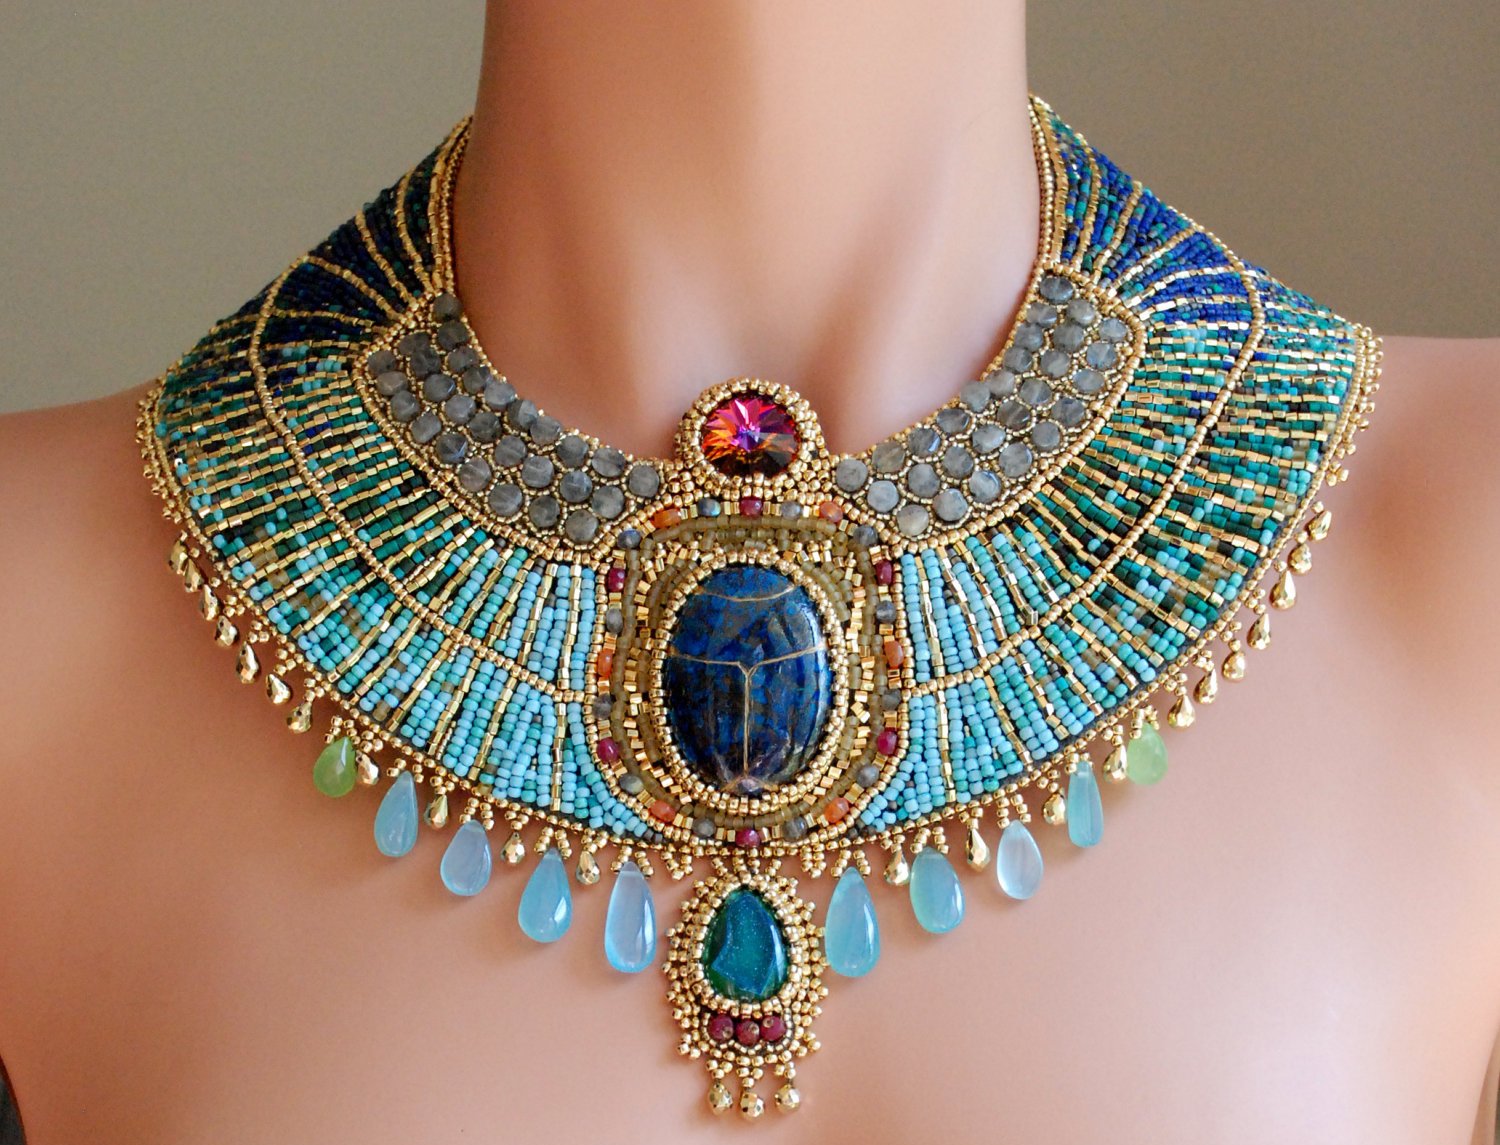 1024 Egyptian Jewellery Images Stock Photos  Vectors  Shutterstock